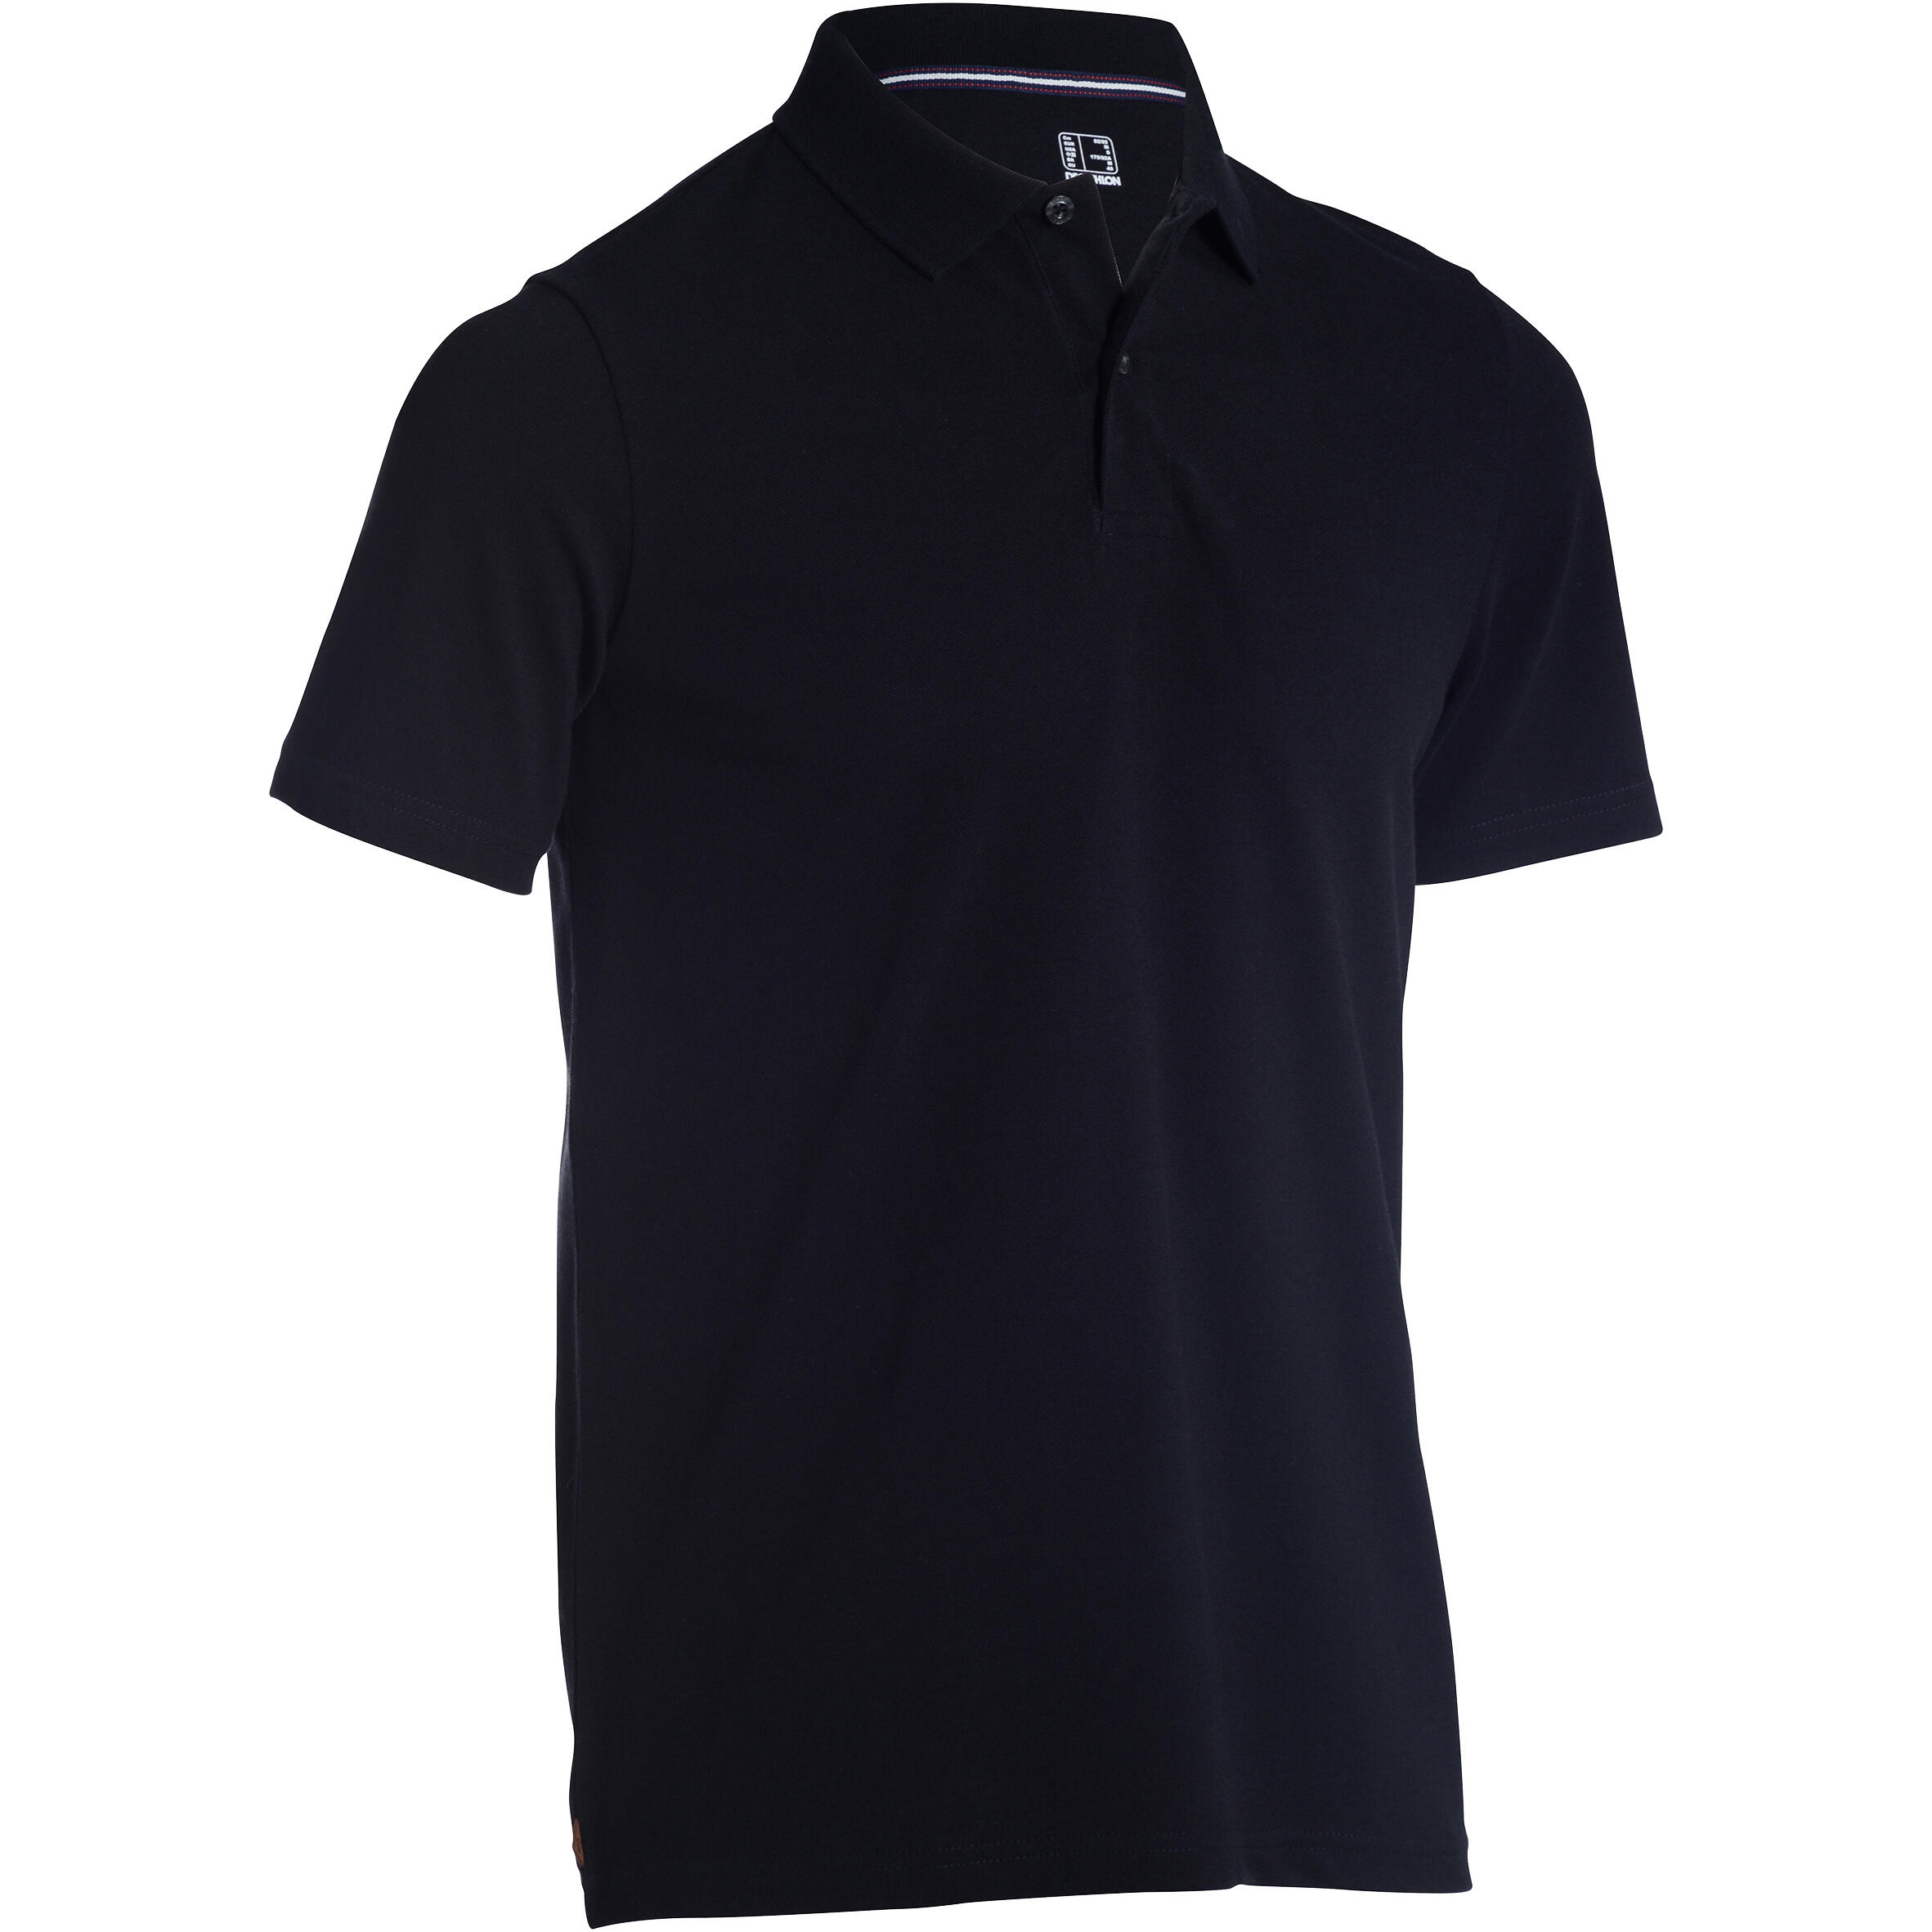 Uniqlo DryEx Golf Polo Shirt Mens XL Gray Stretch Polyester Short Sleeve   eBay